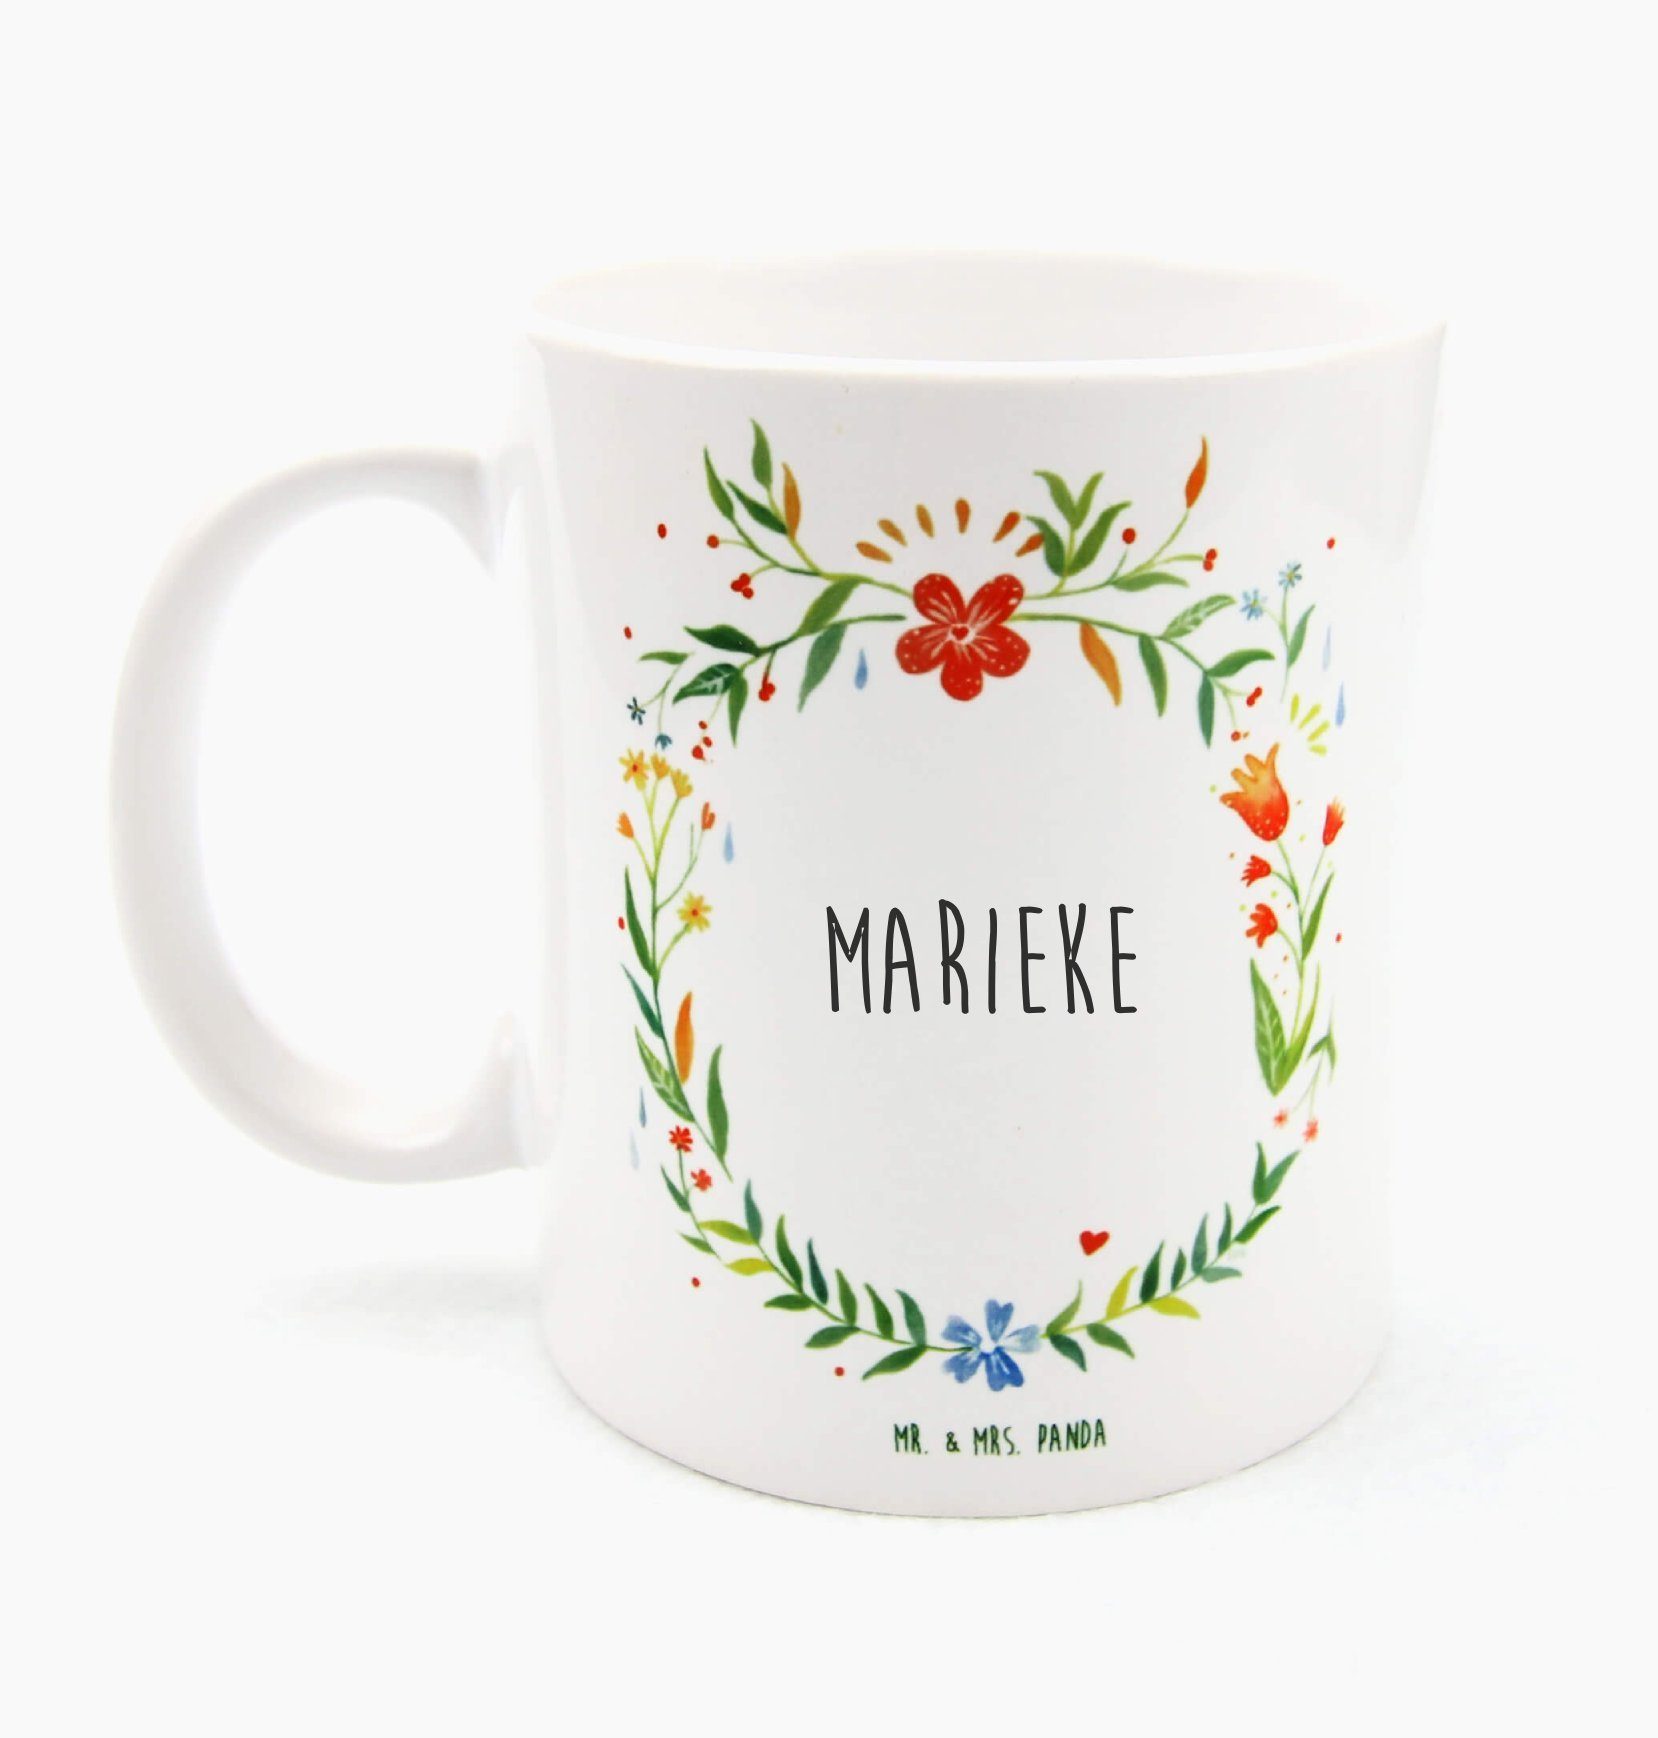 Mr. & Mrs. Panda Tasse, Geschenk, Marieke Kaffeetasse, Teetasse, Tasse, Büro Tasse Keramik - Becher